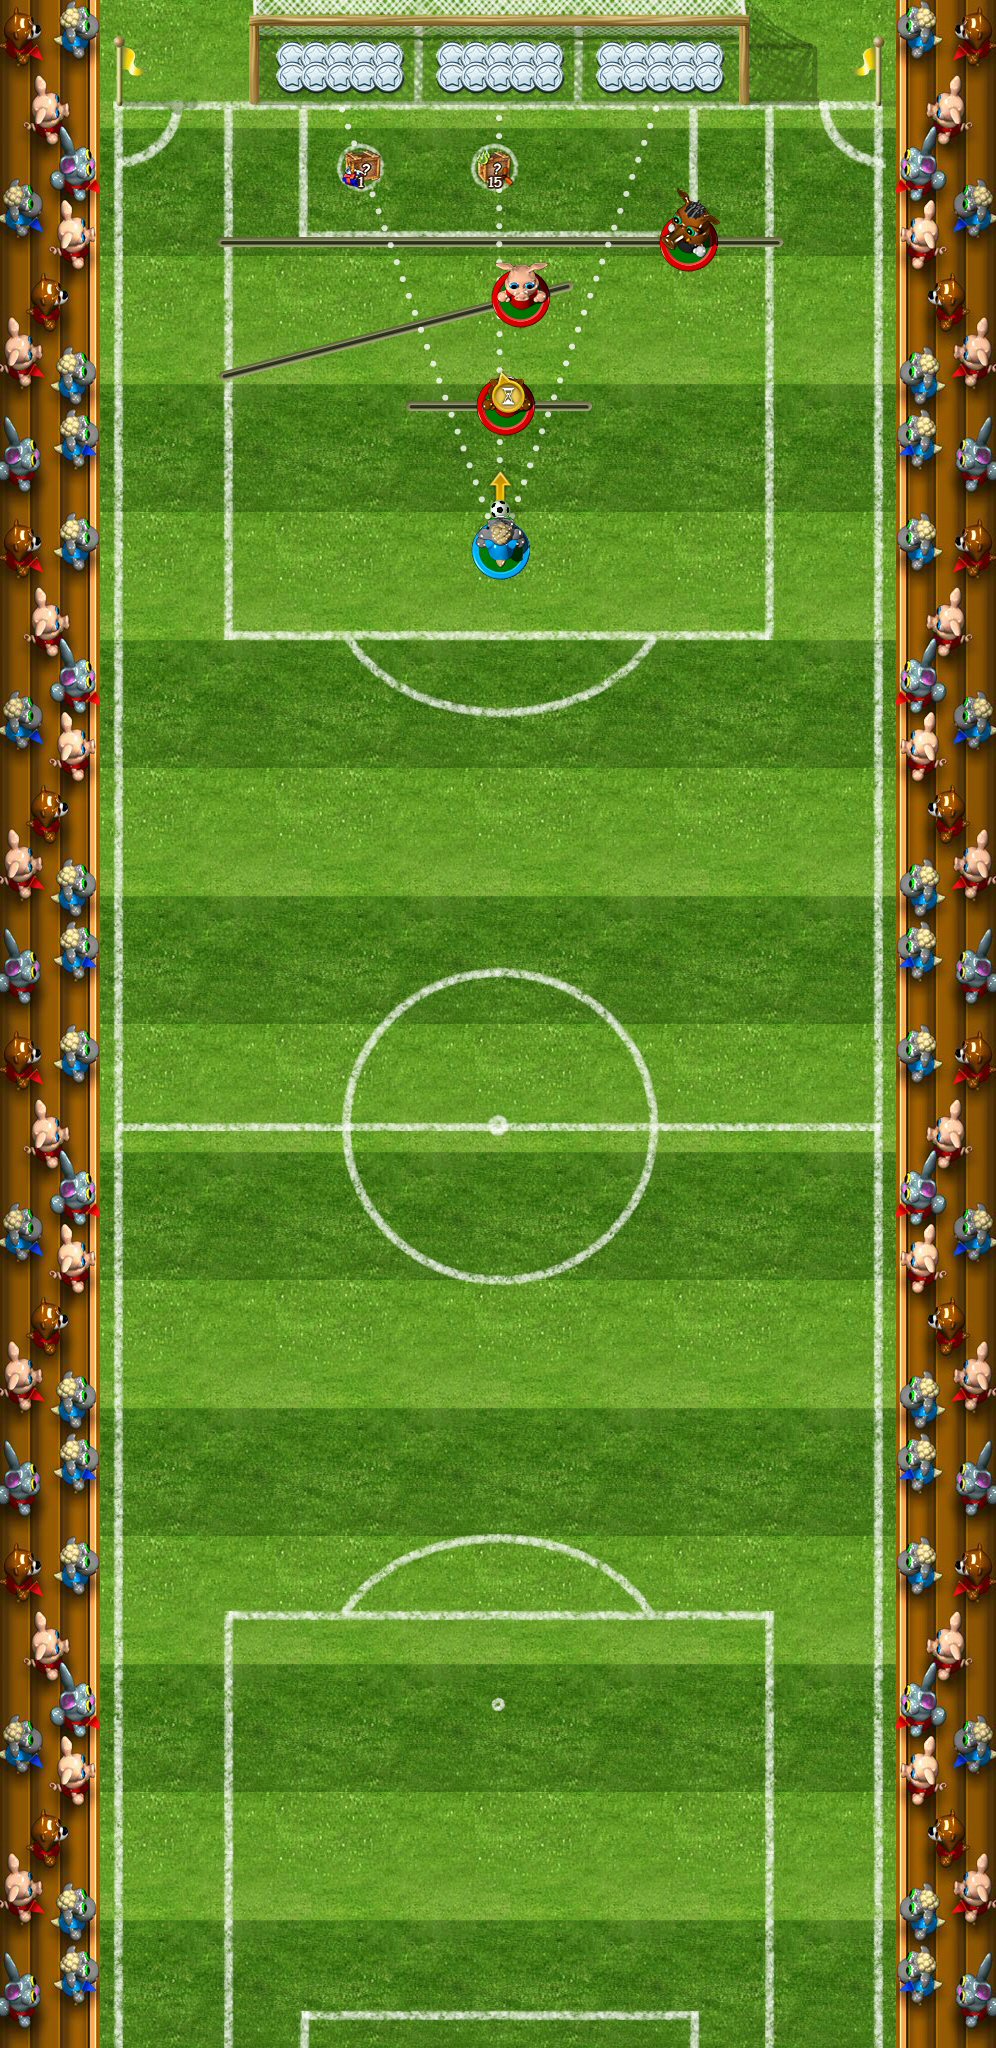 soccerjul2019_layout4.jpg